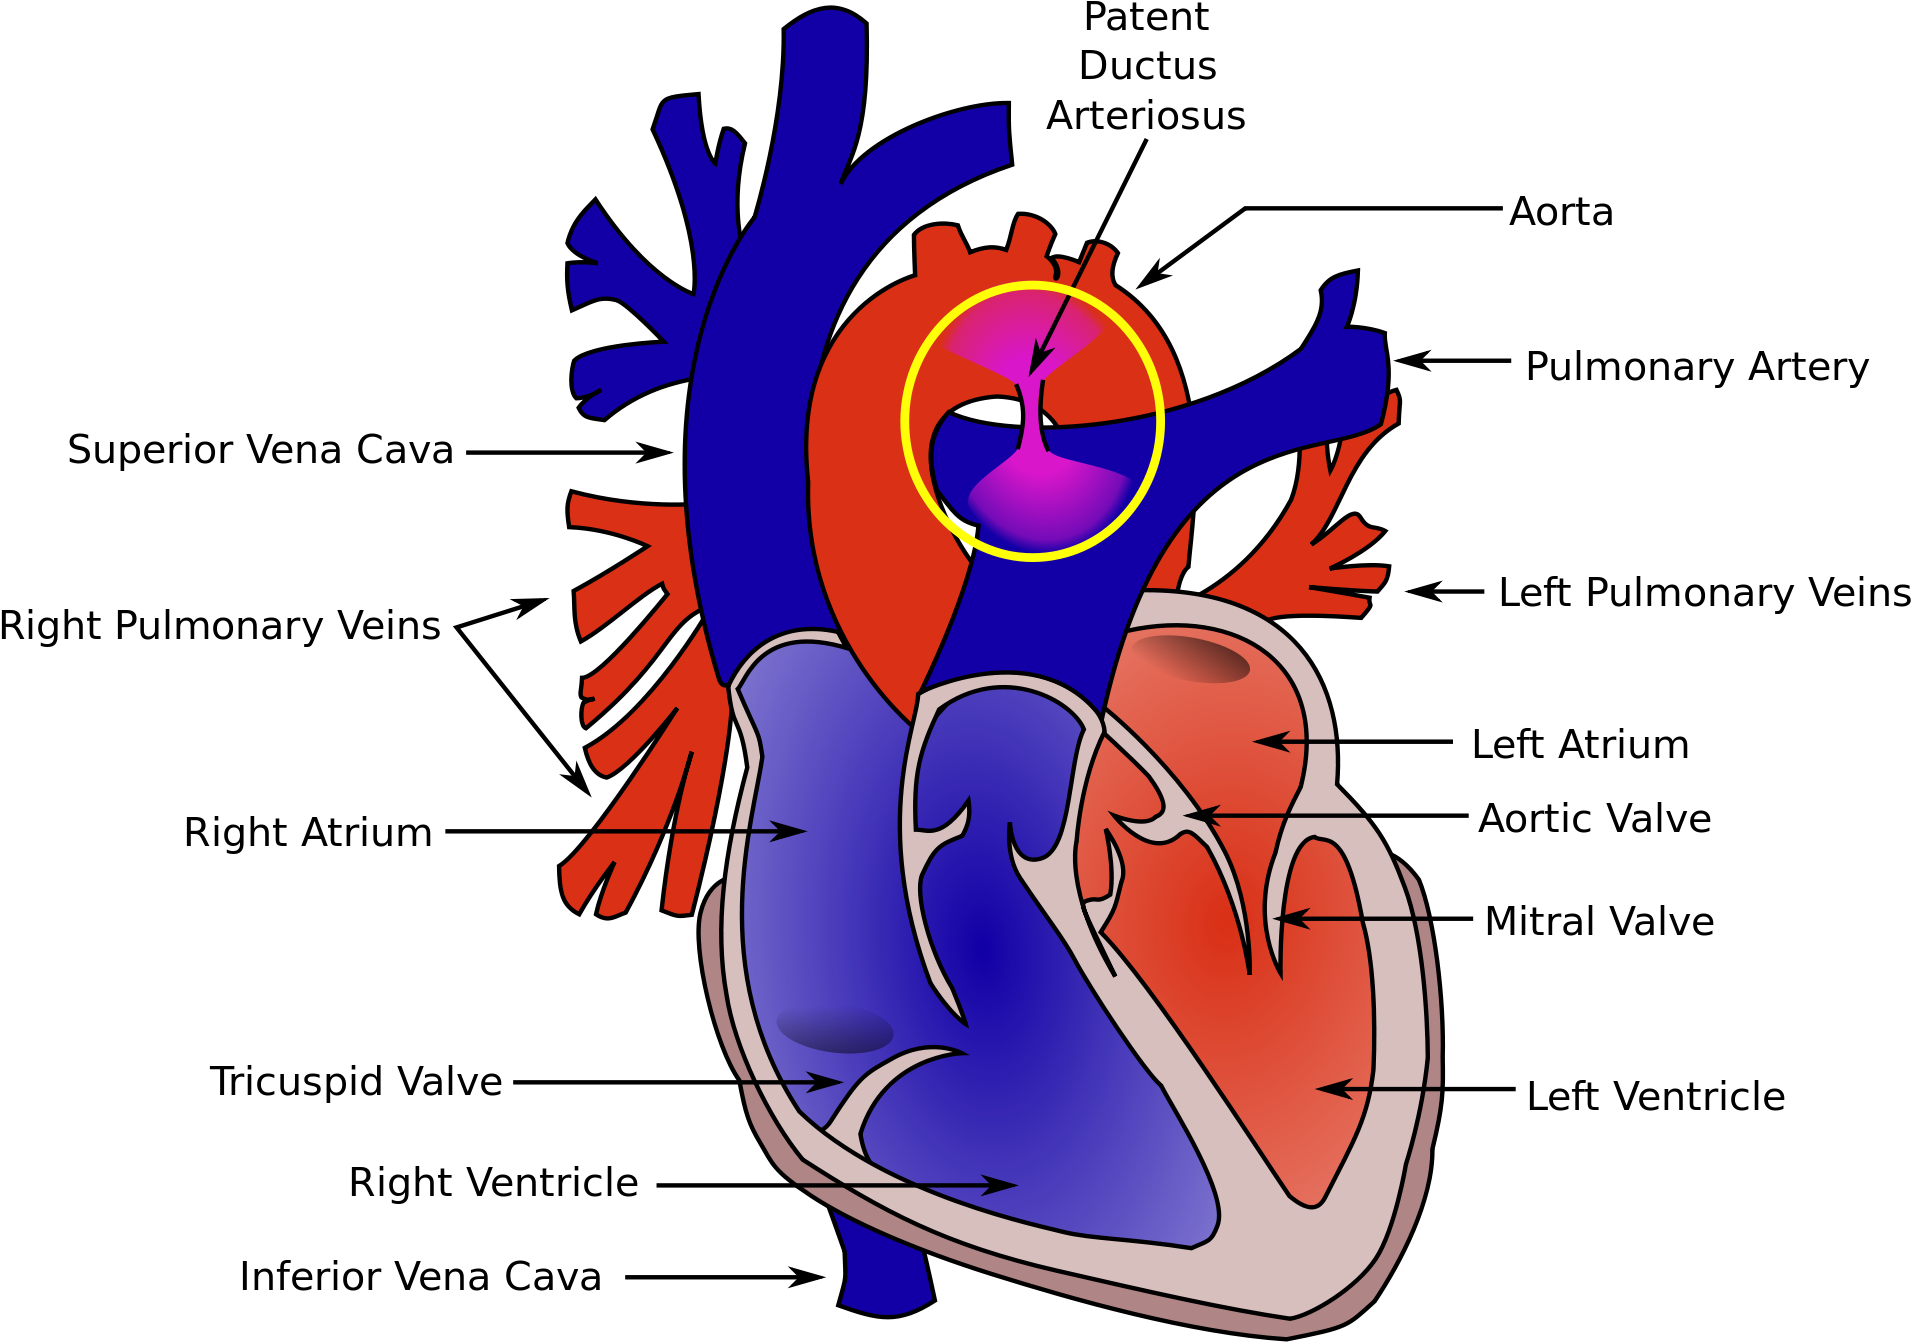 Real Human Heart 19, - Ductus Arteriosus And Ligamentum Arteriosum (2000x1432)